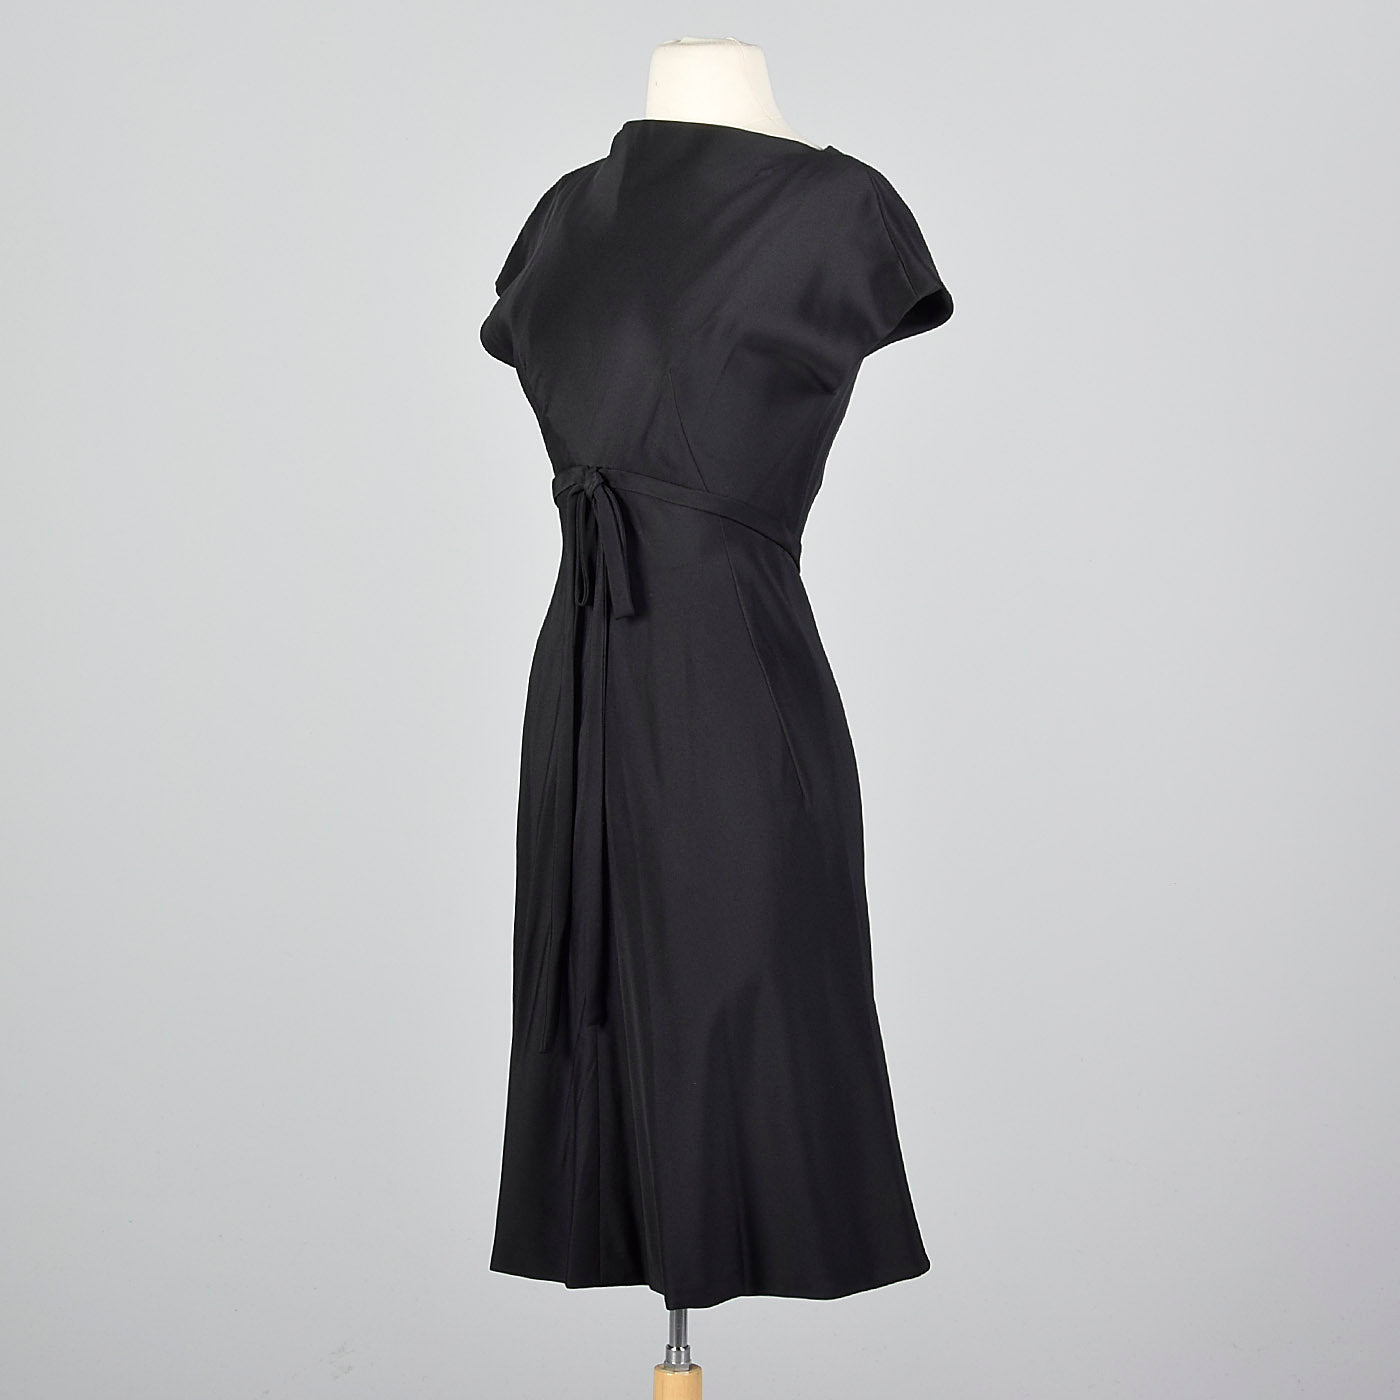 1960s Teal Traina Little Black Dress in Silk